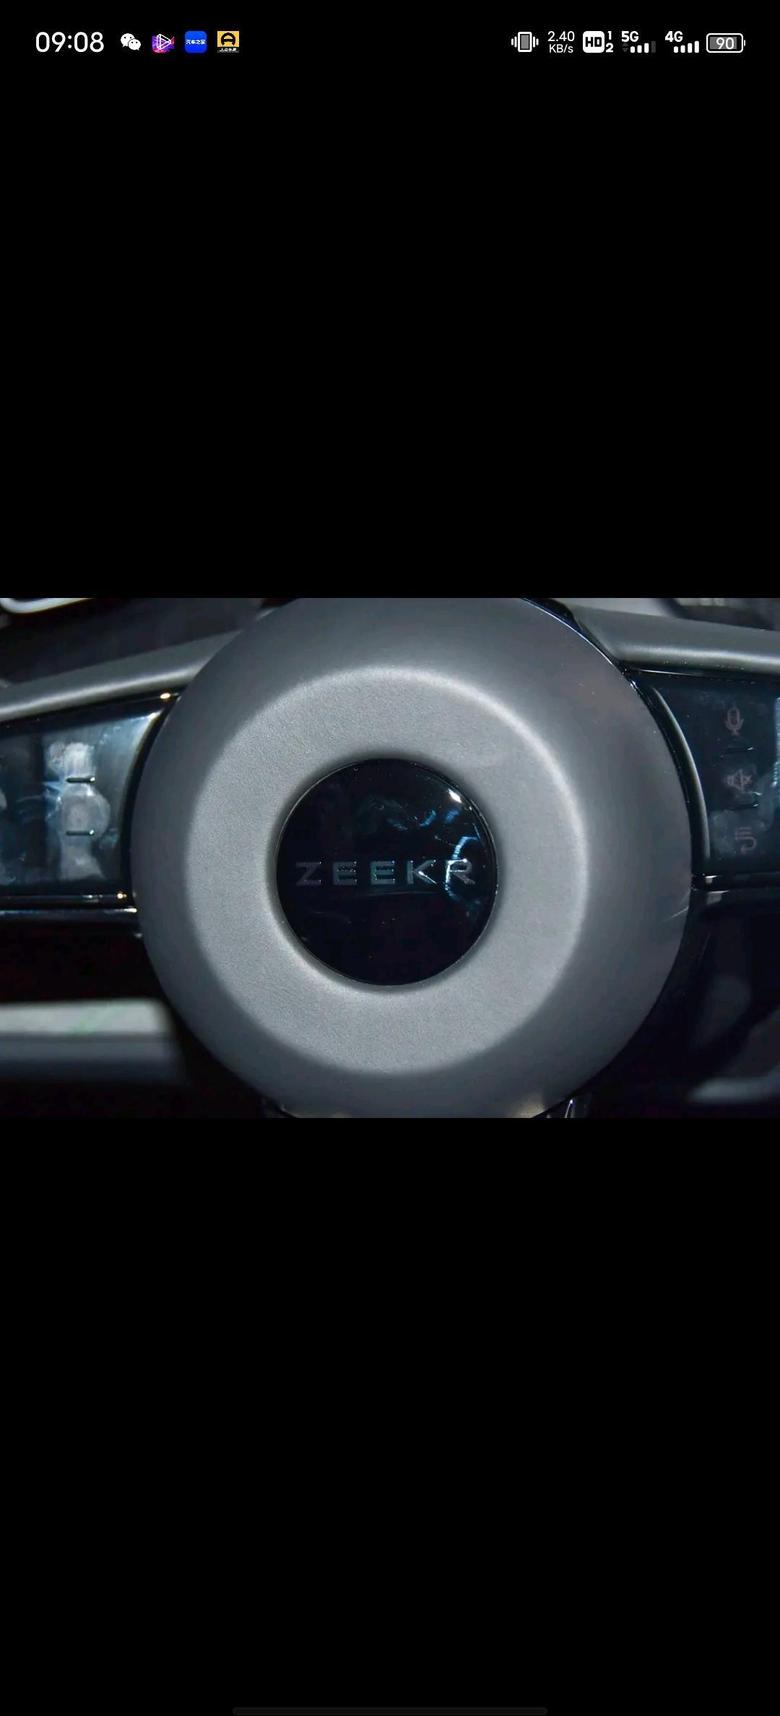 zeekr 001 个人主官建议方向盘上的logo换成车头的logo图案，纯英文有点审美不了